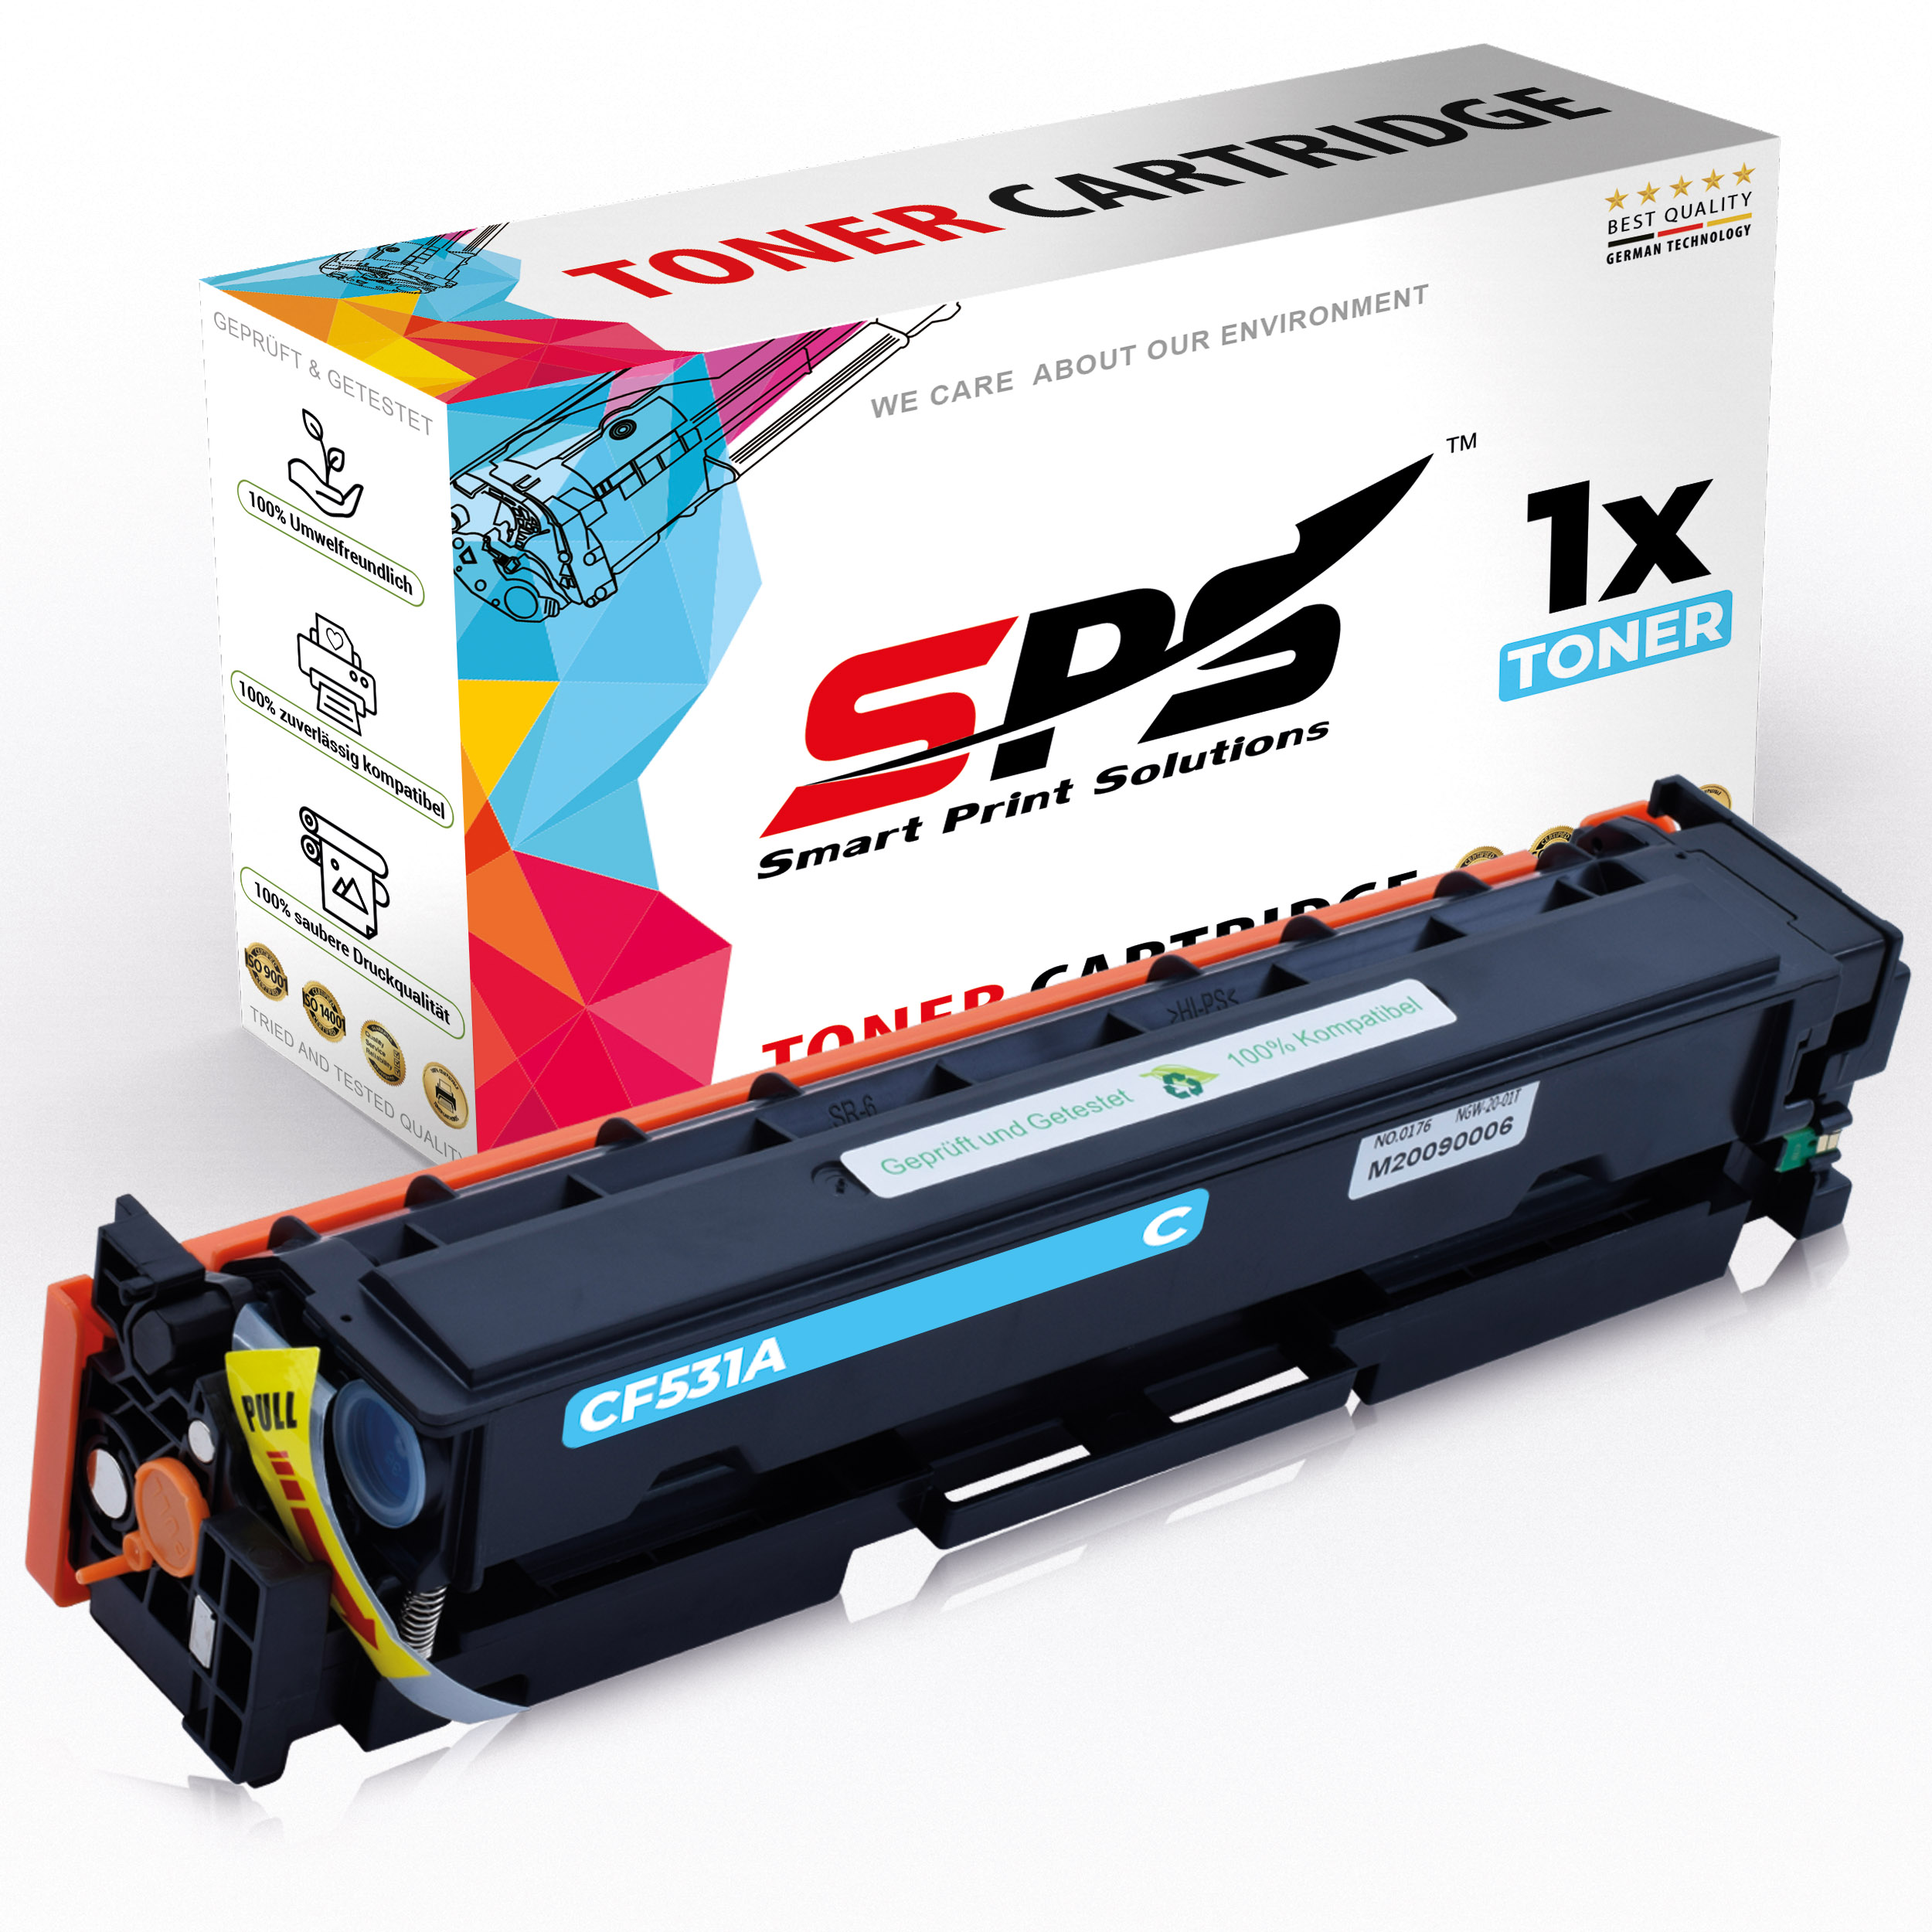 SPS S-16310 CF531A Toner / Pro MFP M181) (205A Laserjet Cyan Color